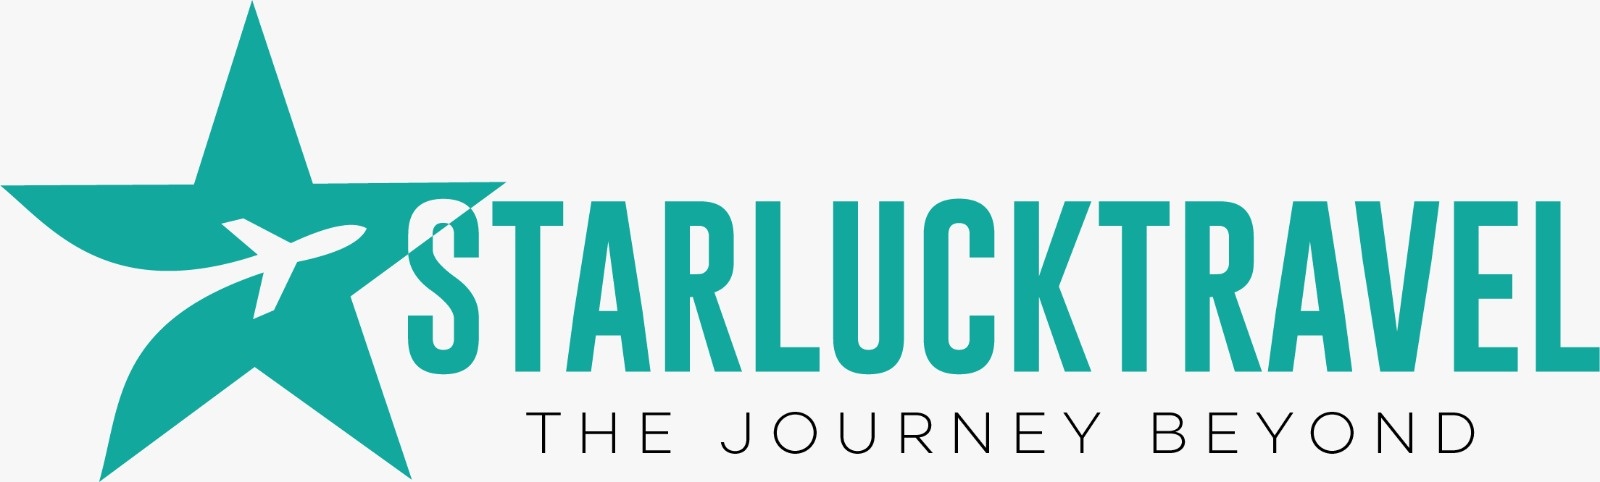 Starluck Travel Logo